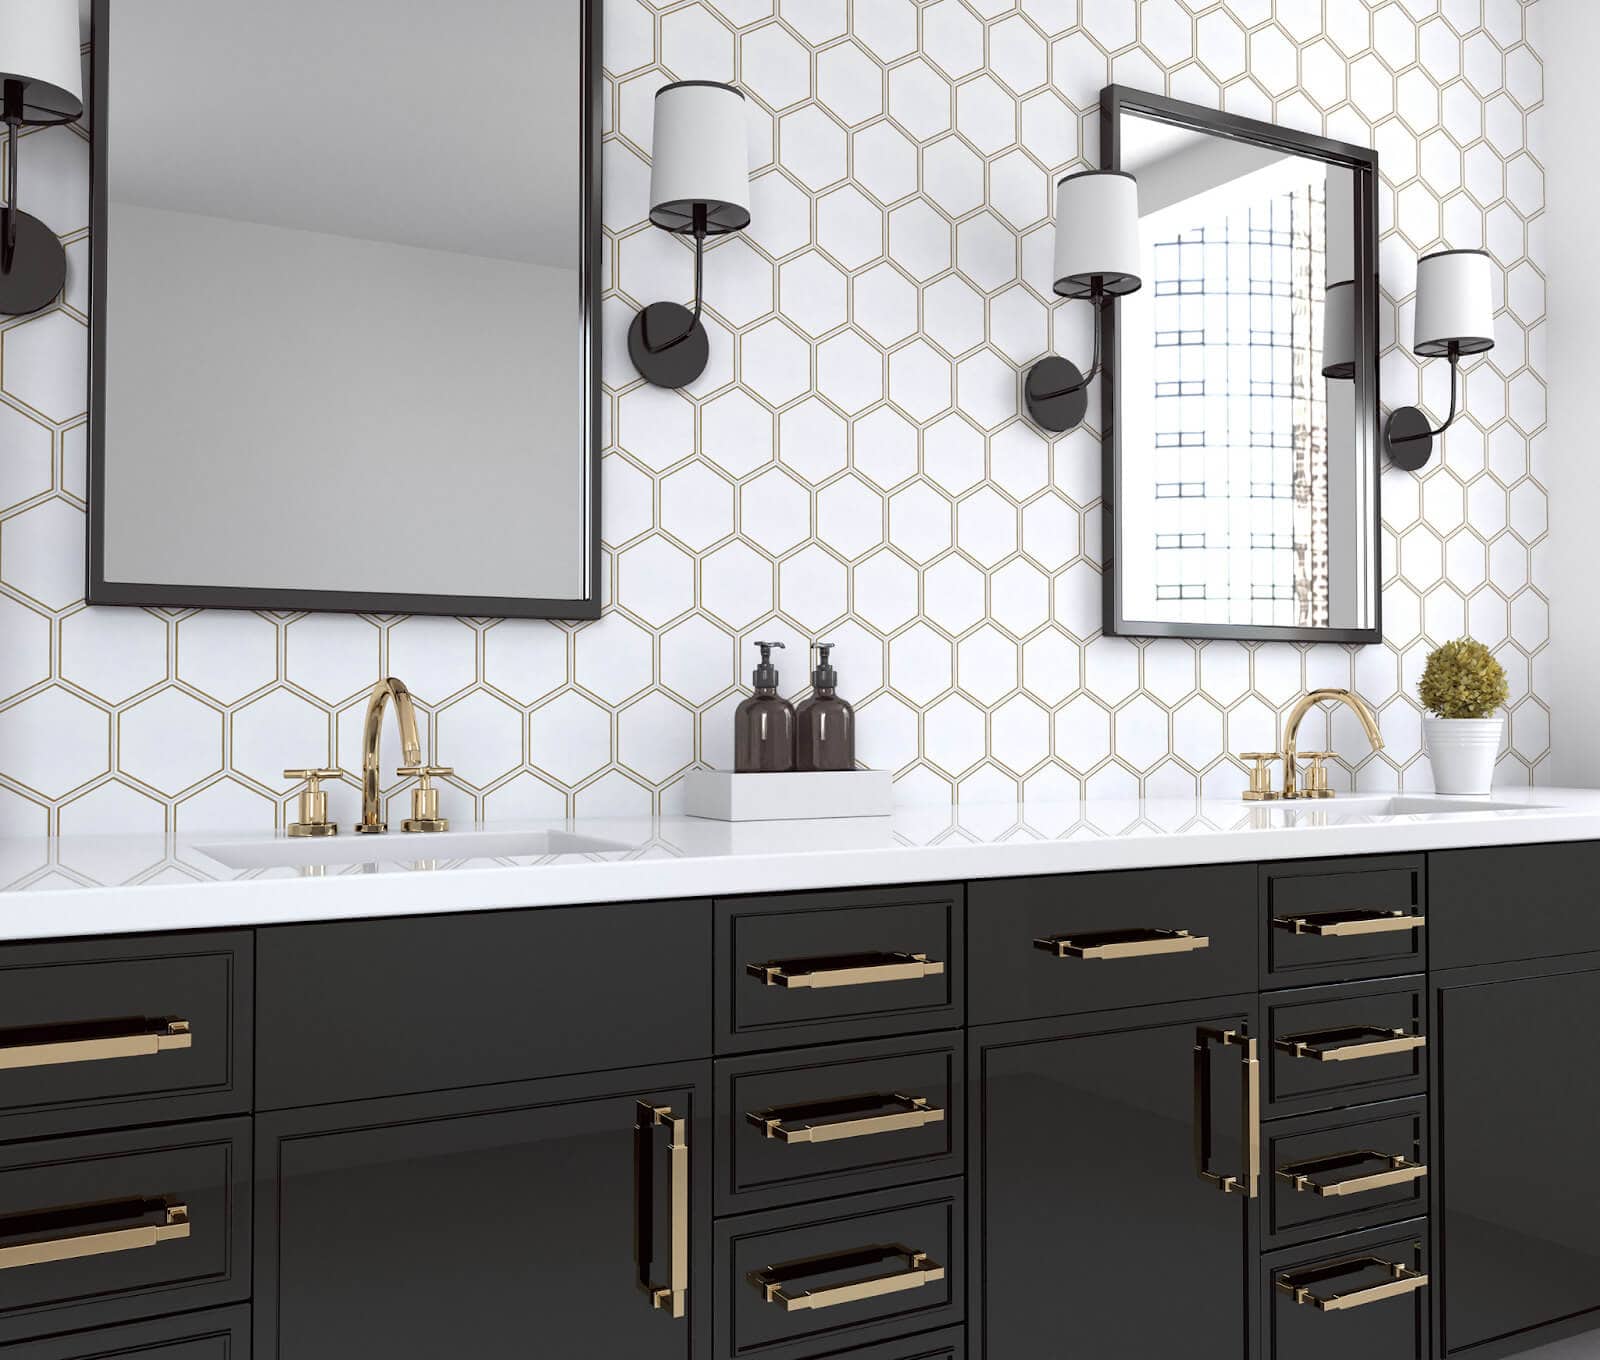 Bathroom sinks with white hexagon tile backsplash

